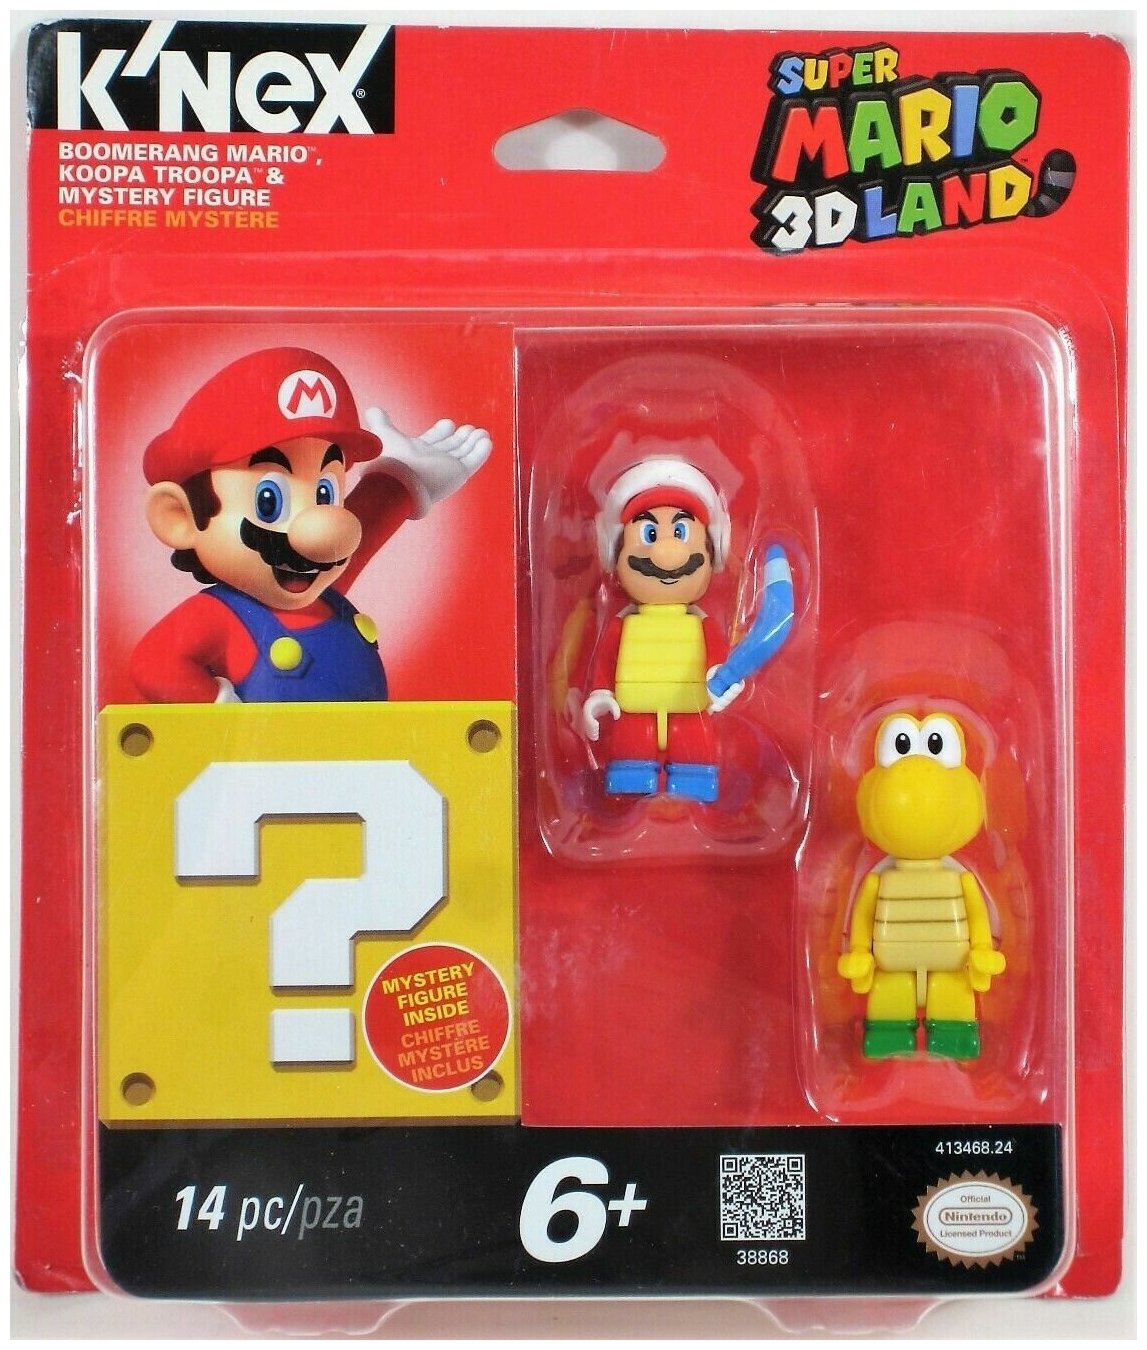 Набор мини-фигурок Марио Бумеранг и Купа Трупа + 1 фигурка сюрприз K'NEX Super Mario 3D Land Boomerang Mario & Koopa Troopa Nintendo